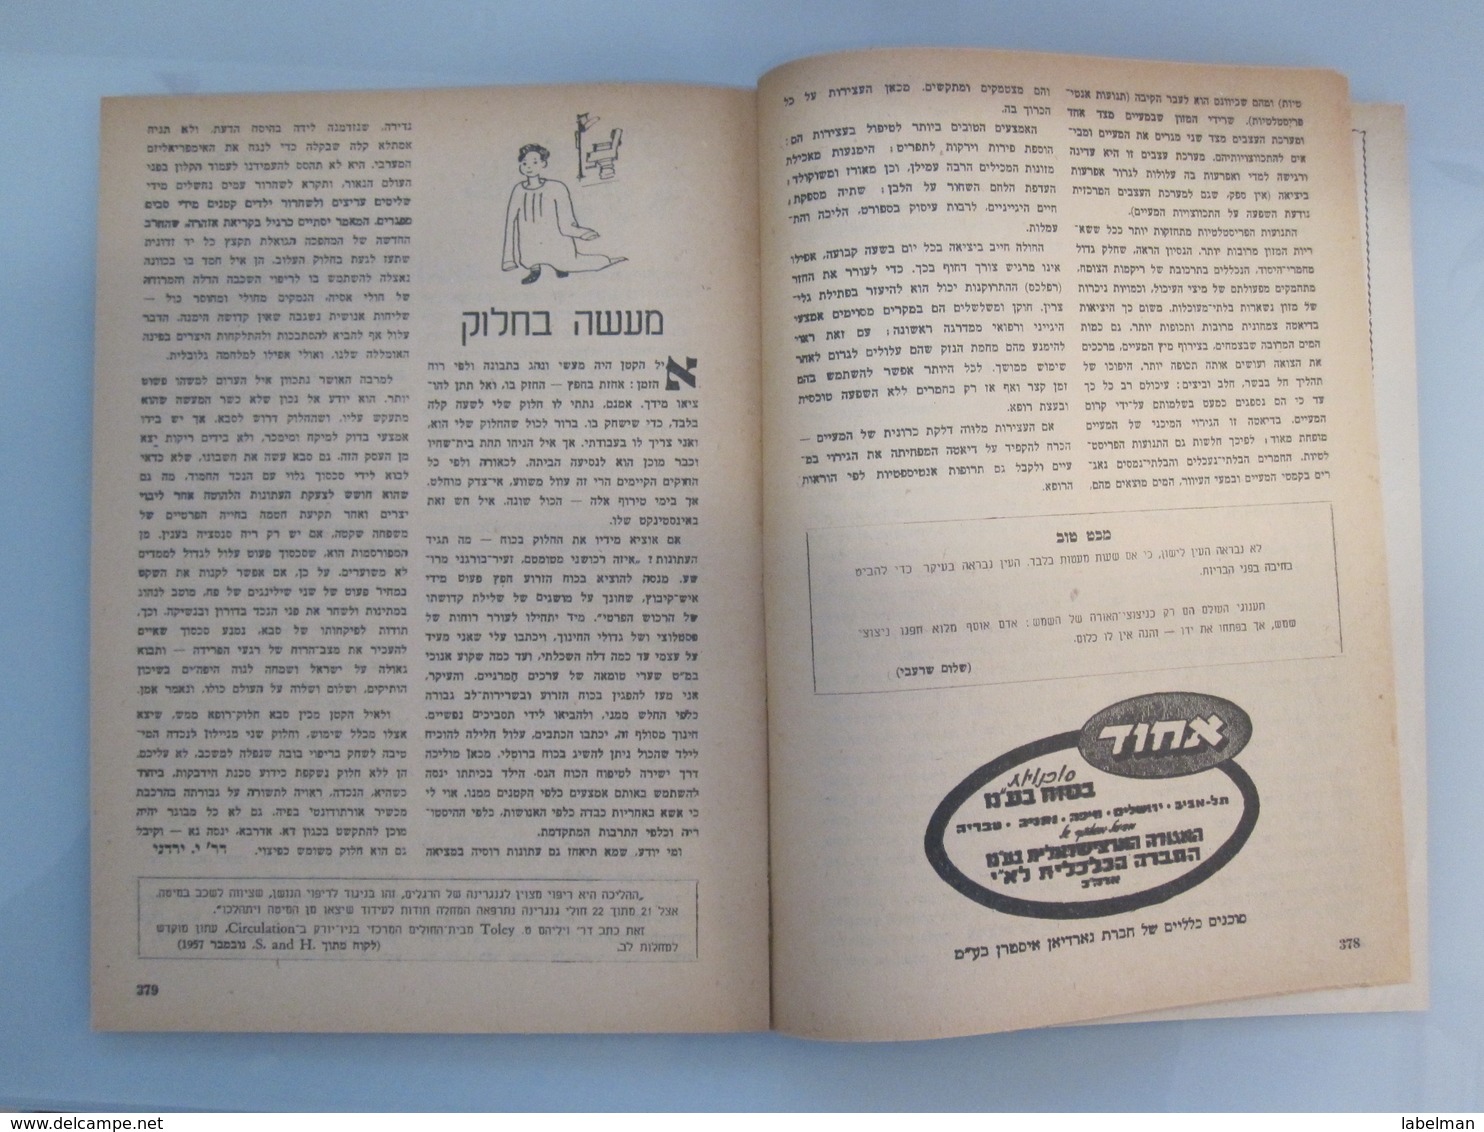 ISRAEL HOTEL MOTEL INN GUEST REST HOUSE KUPAT HOLIM 1958 NEWSPAPER ADVERTISING MAGAZINE - Advertising